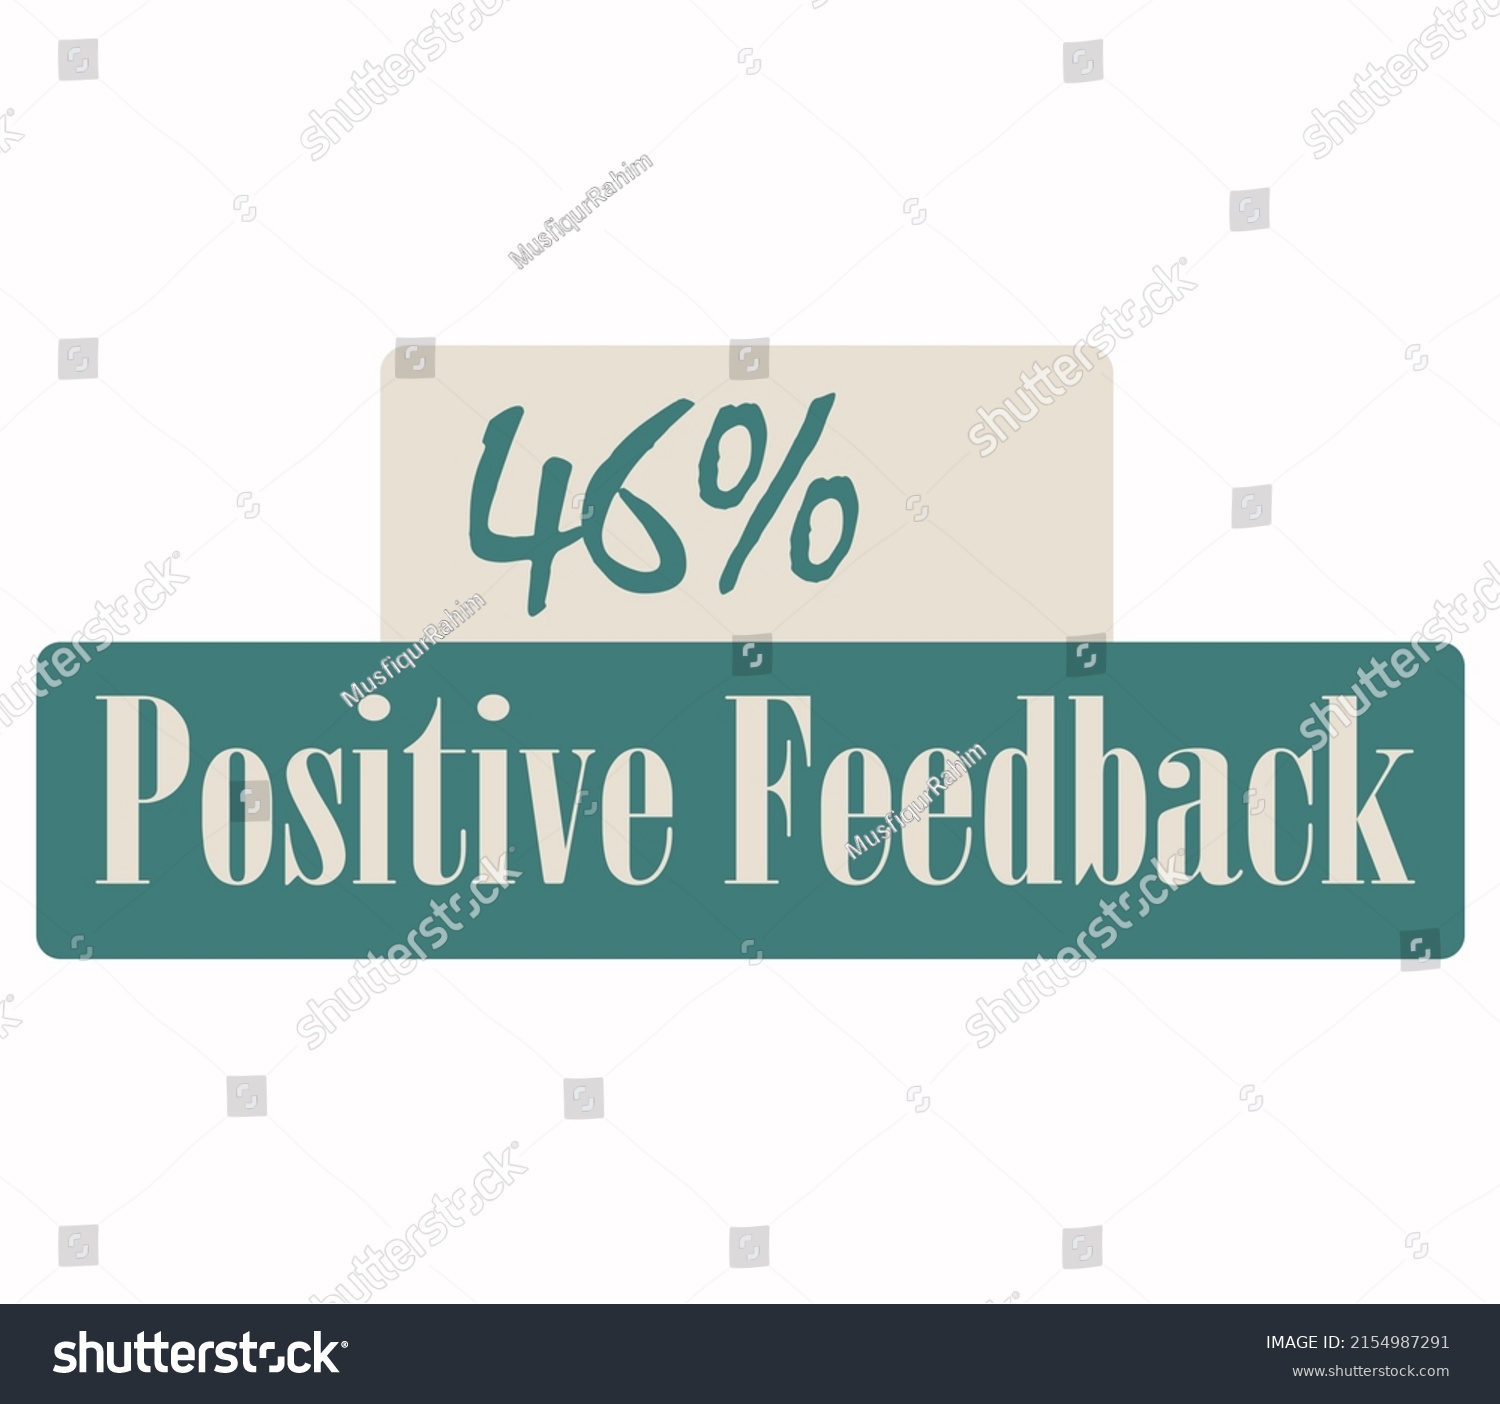 46% percentage positive feedback sign label vector art illustration with fantastic serif font and green color #2154987291